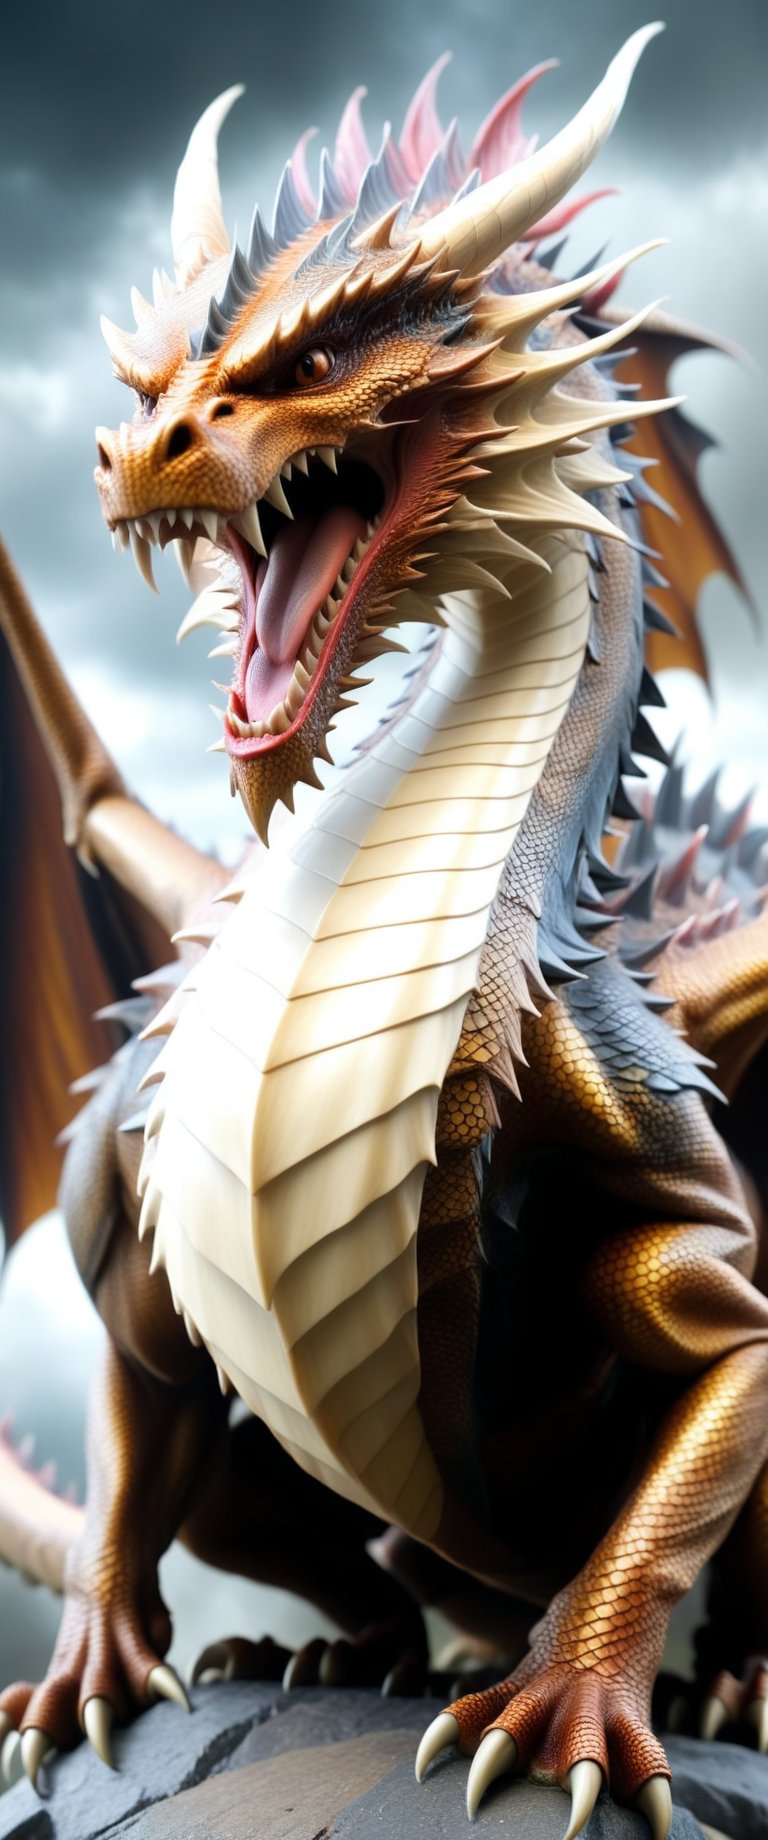 Angry fierce dragon,,darkart,,,DonMn1ghtm4reXL,,skpleonardostyle,